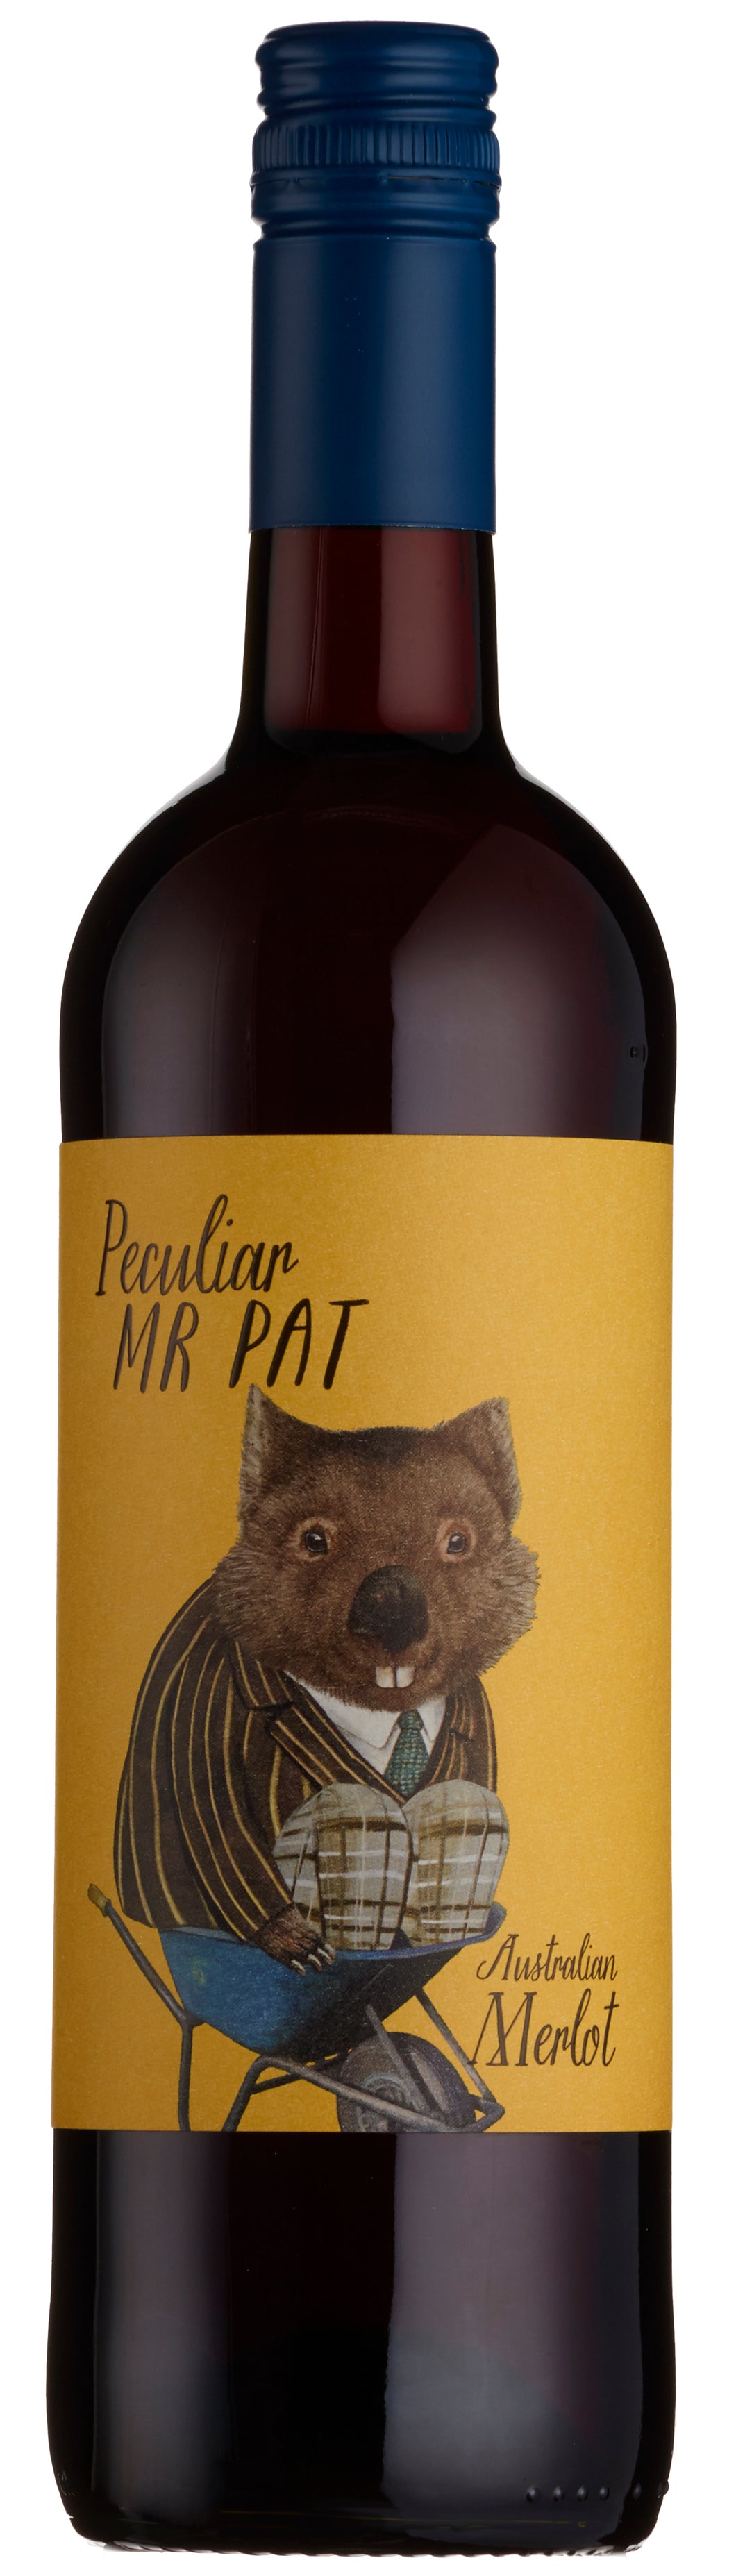 PECULIAR MR PAT MERLOT - Vino Wines